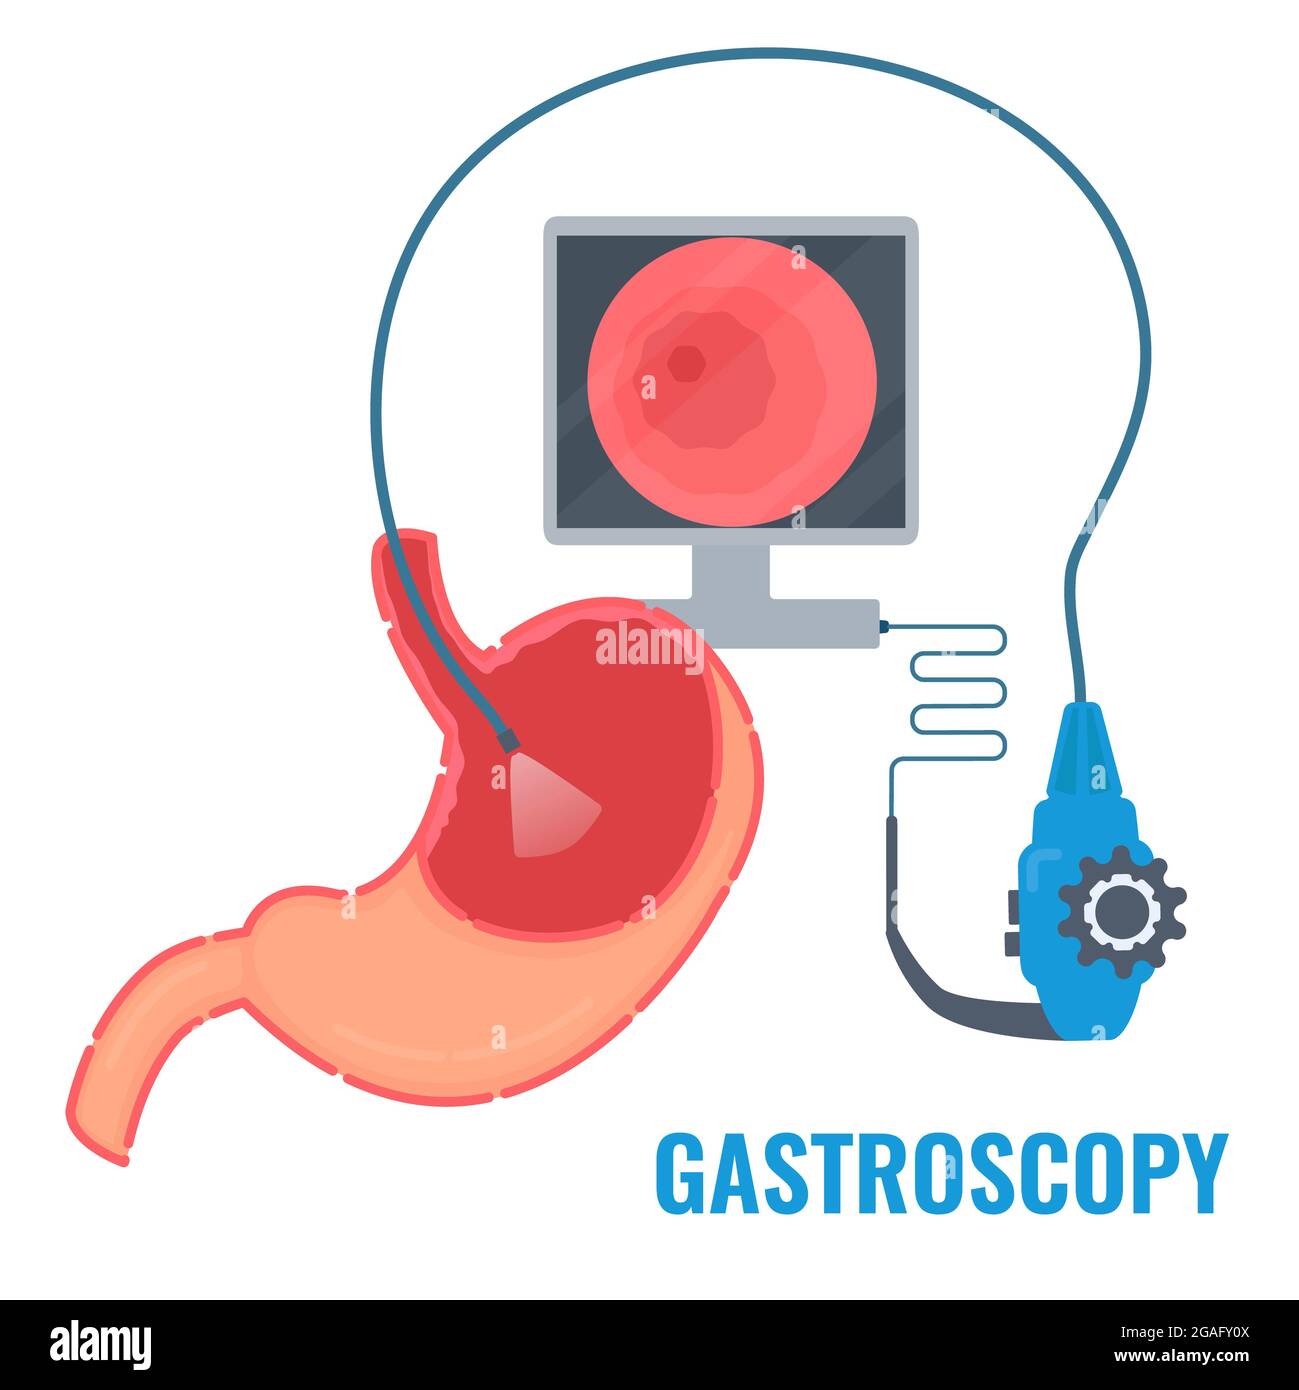 Gastroscopy, conceptual illustration Stock Photo